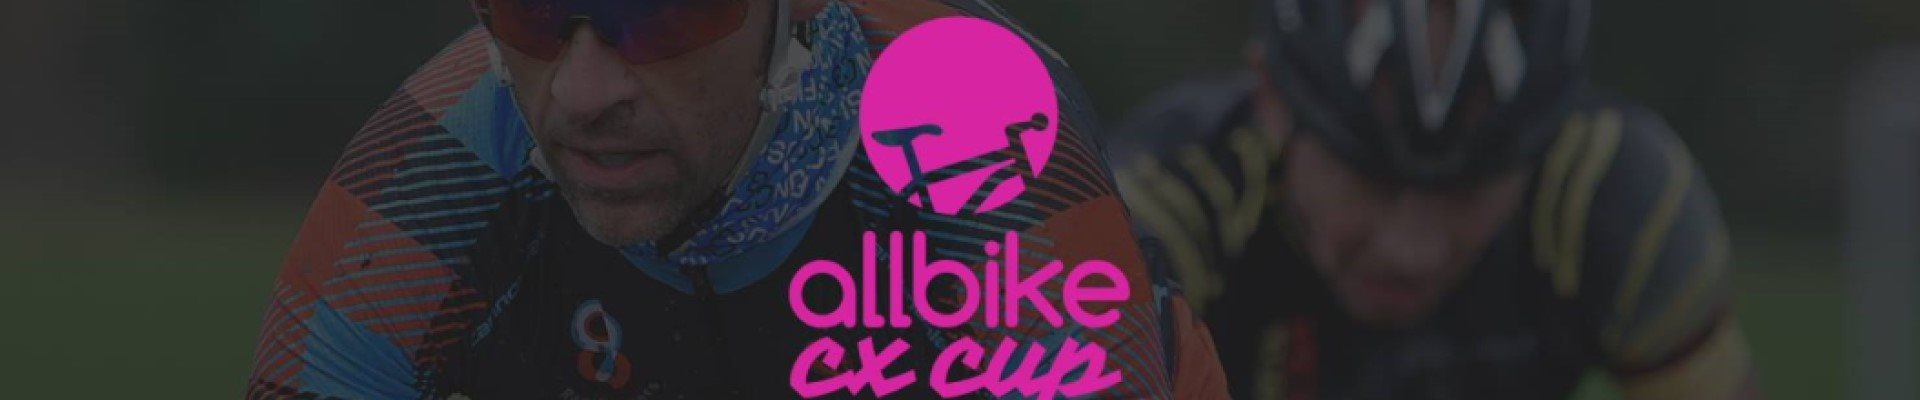 Allbike CX cup #samlet